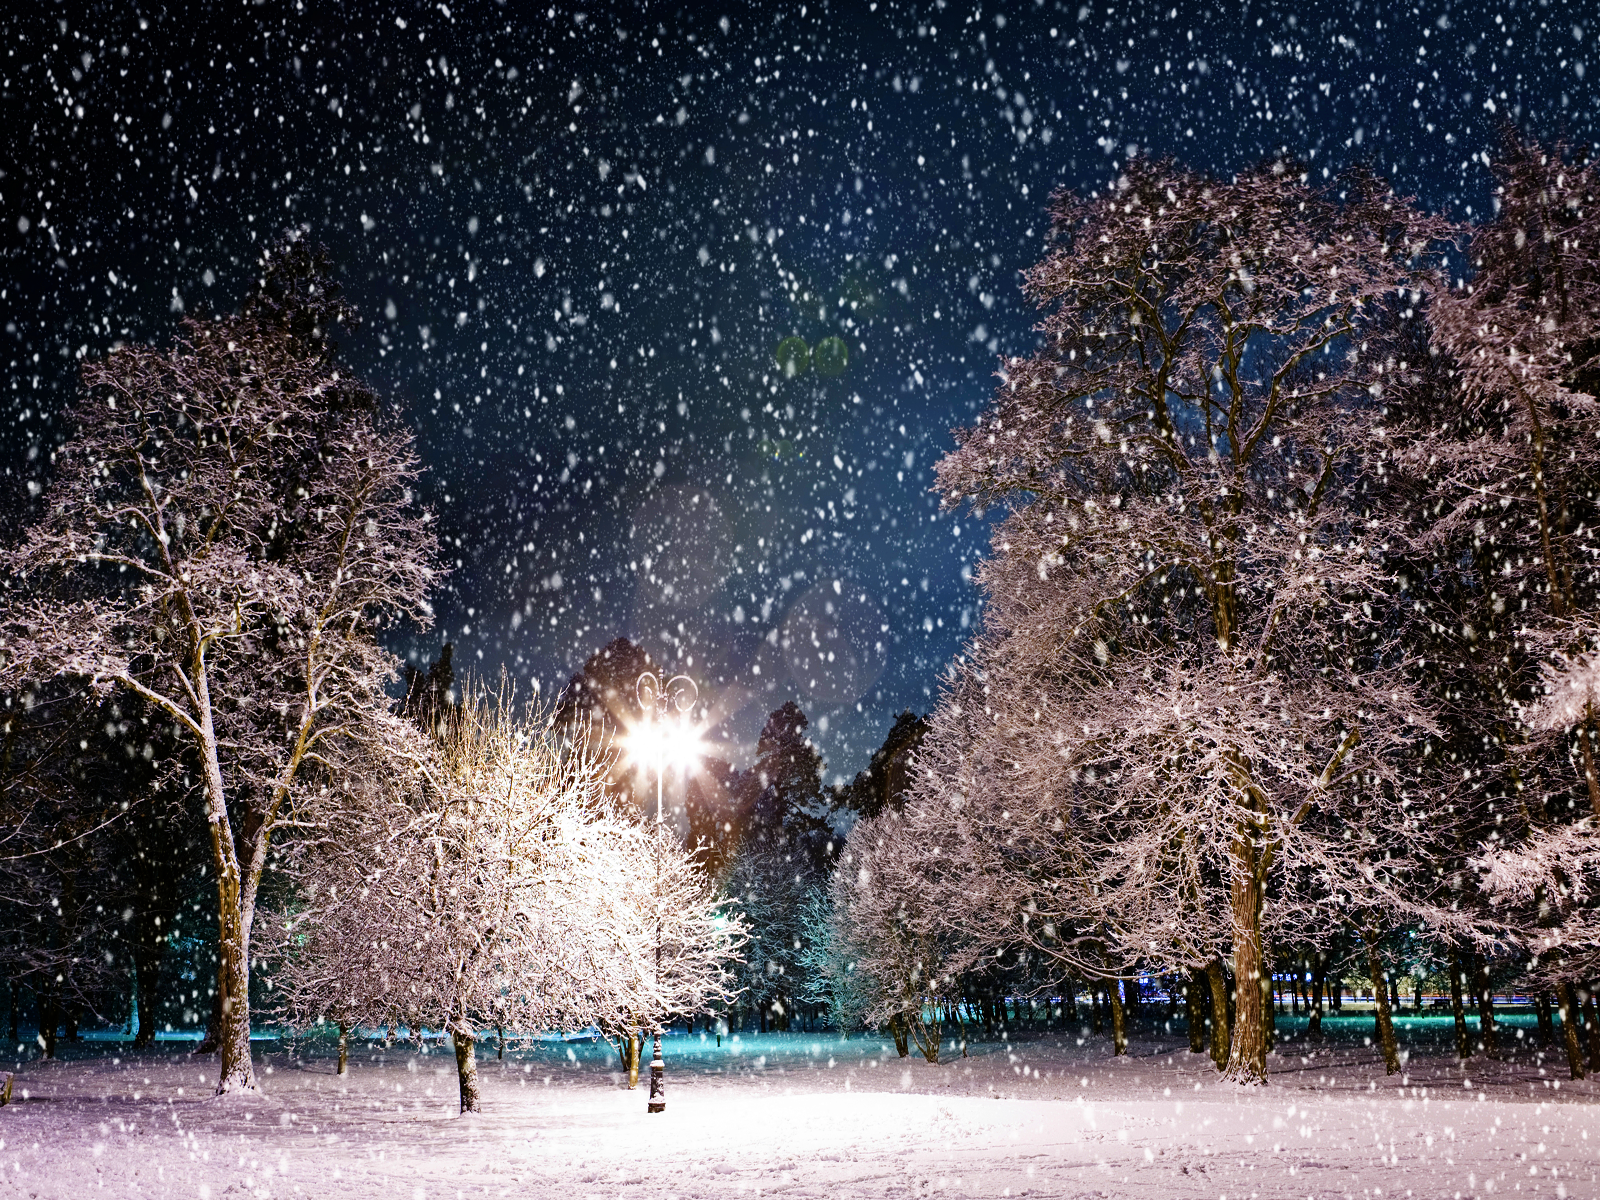 Snowy Winter Night Scenes Wallpaper